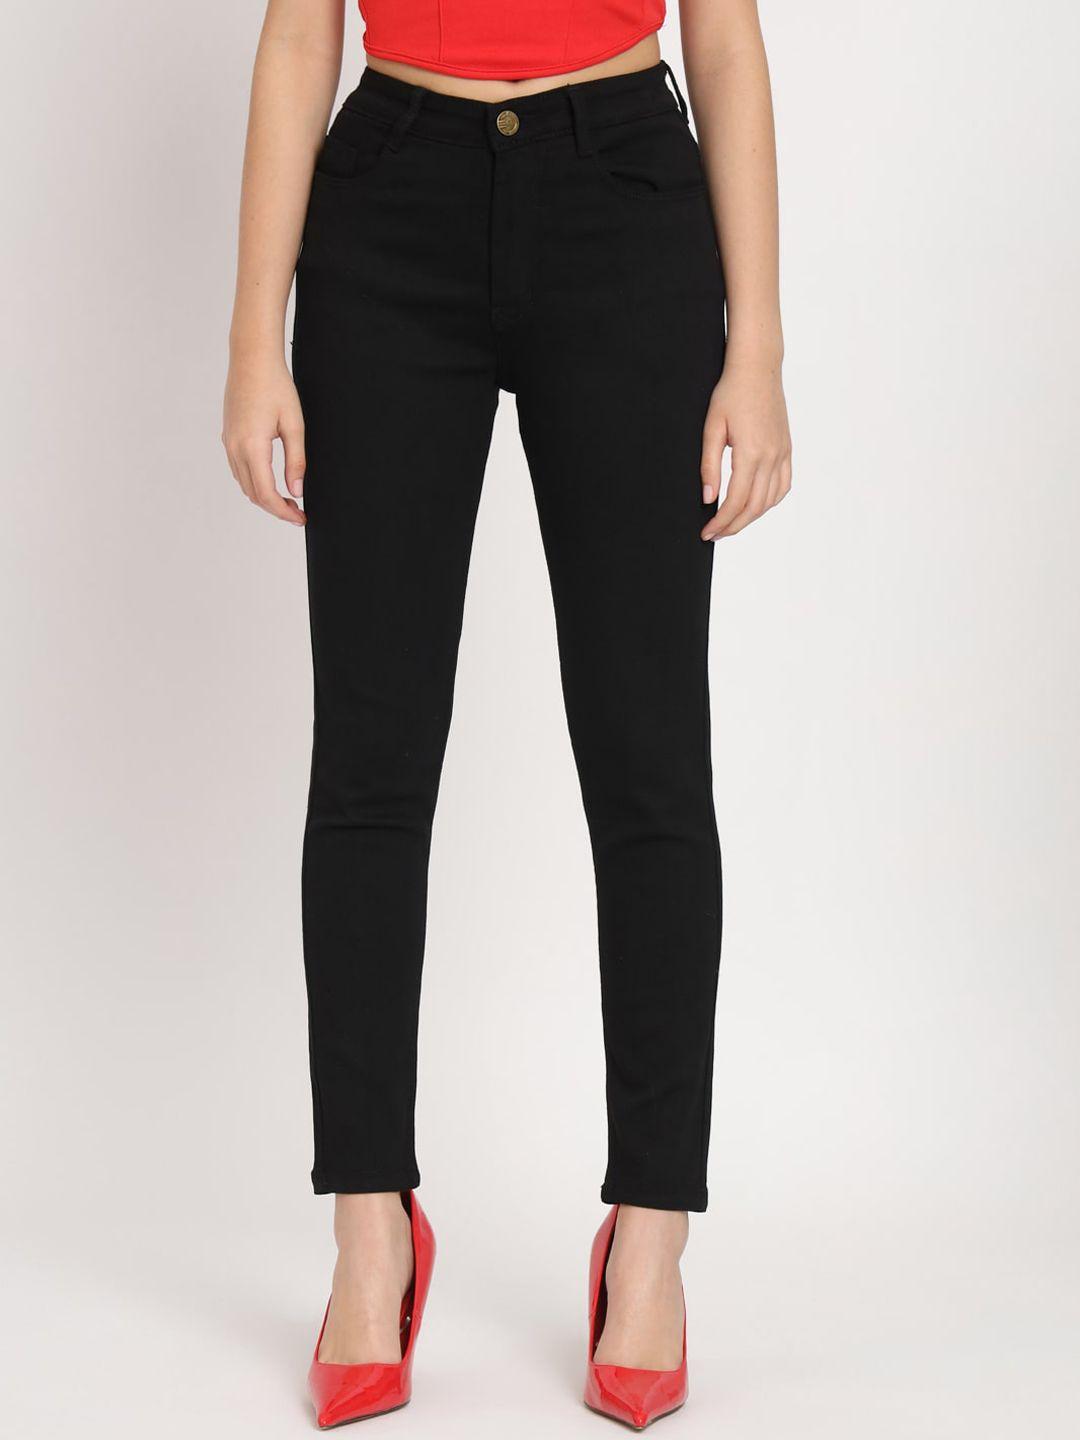 BAESD Women Jean Skinny Fit Mid-Rise Dark Shade Clean Look Cotton Jeans